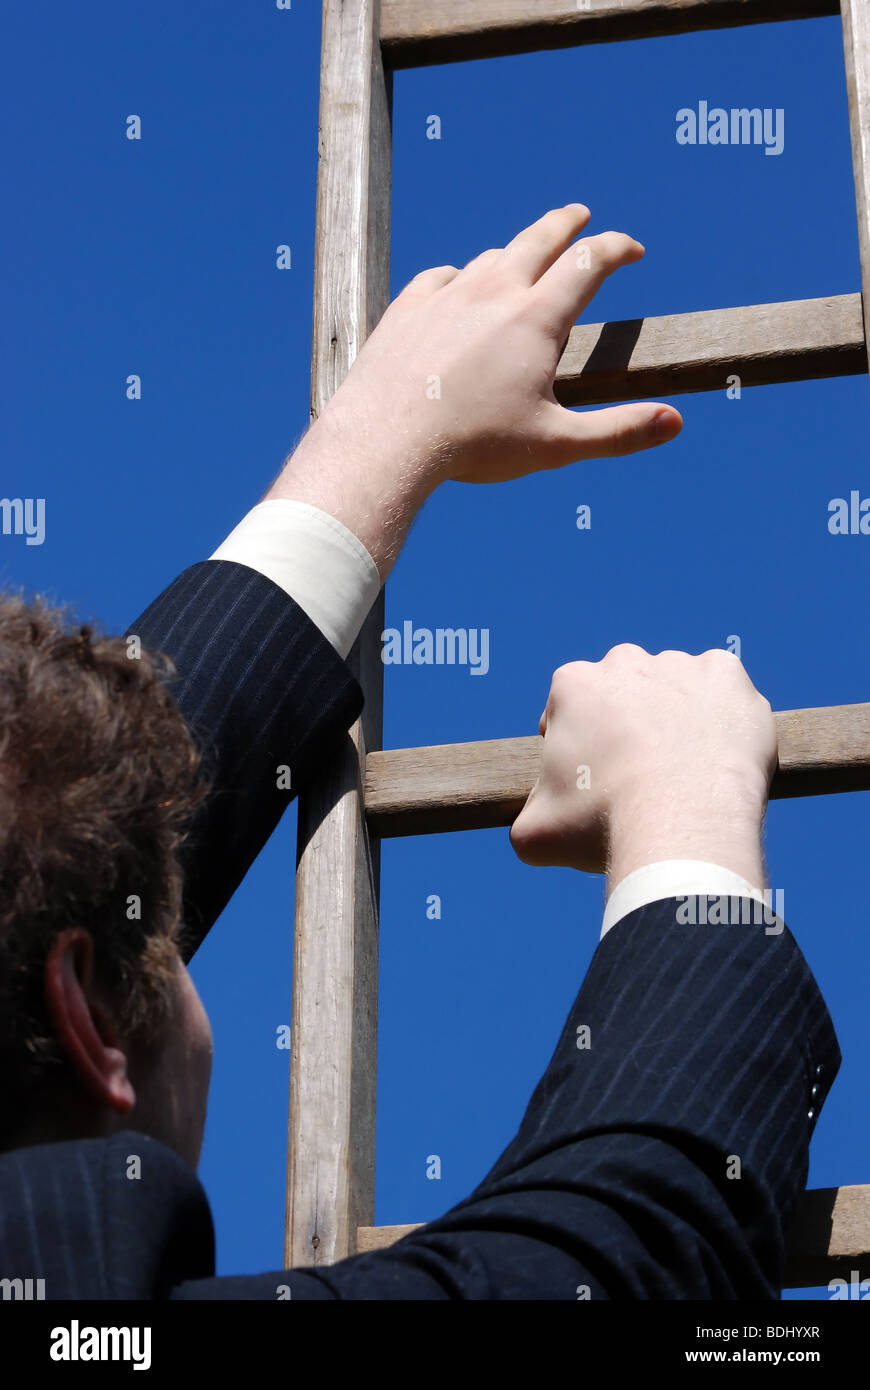 Climbing the ladder of success Stock Photo